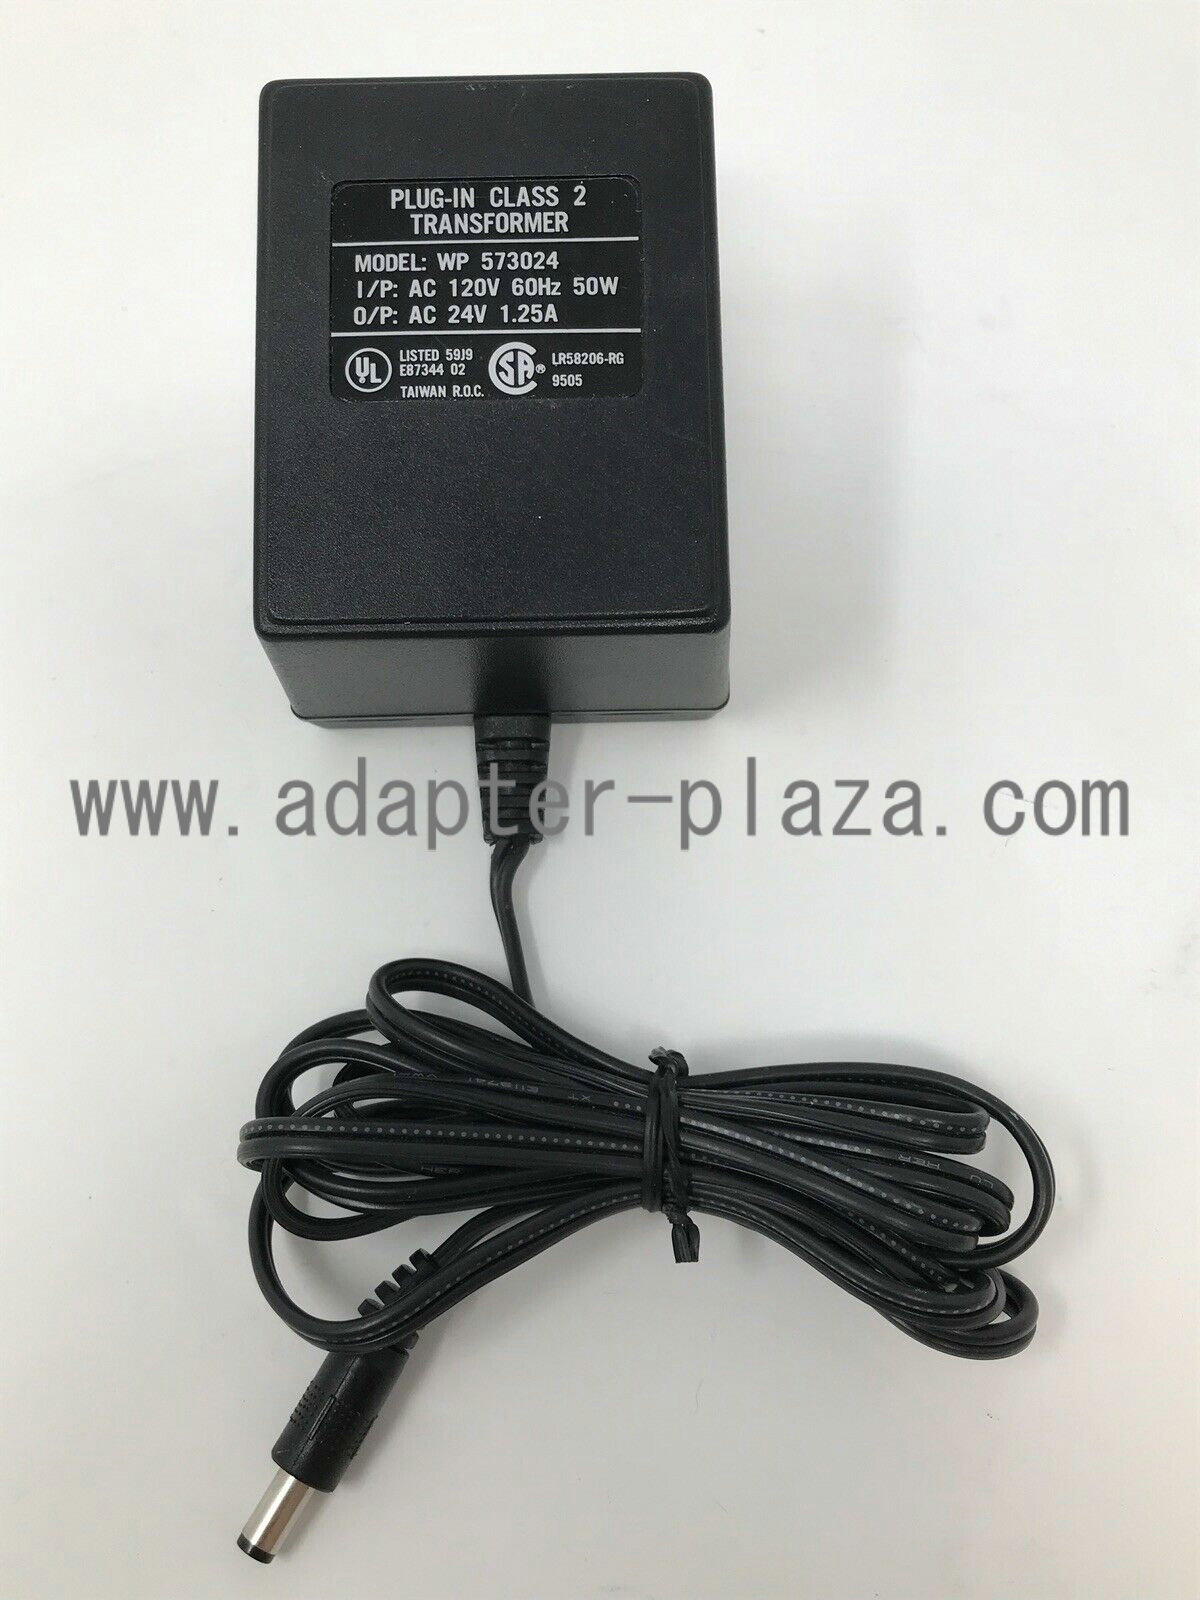 NEW WP 573024 AC 24V 1.25A Plug-In Class 2 Transformer AC Adapter